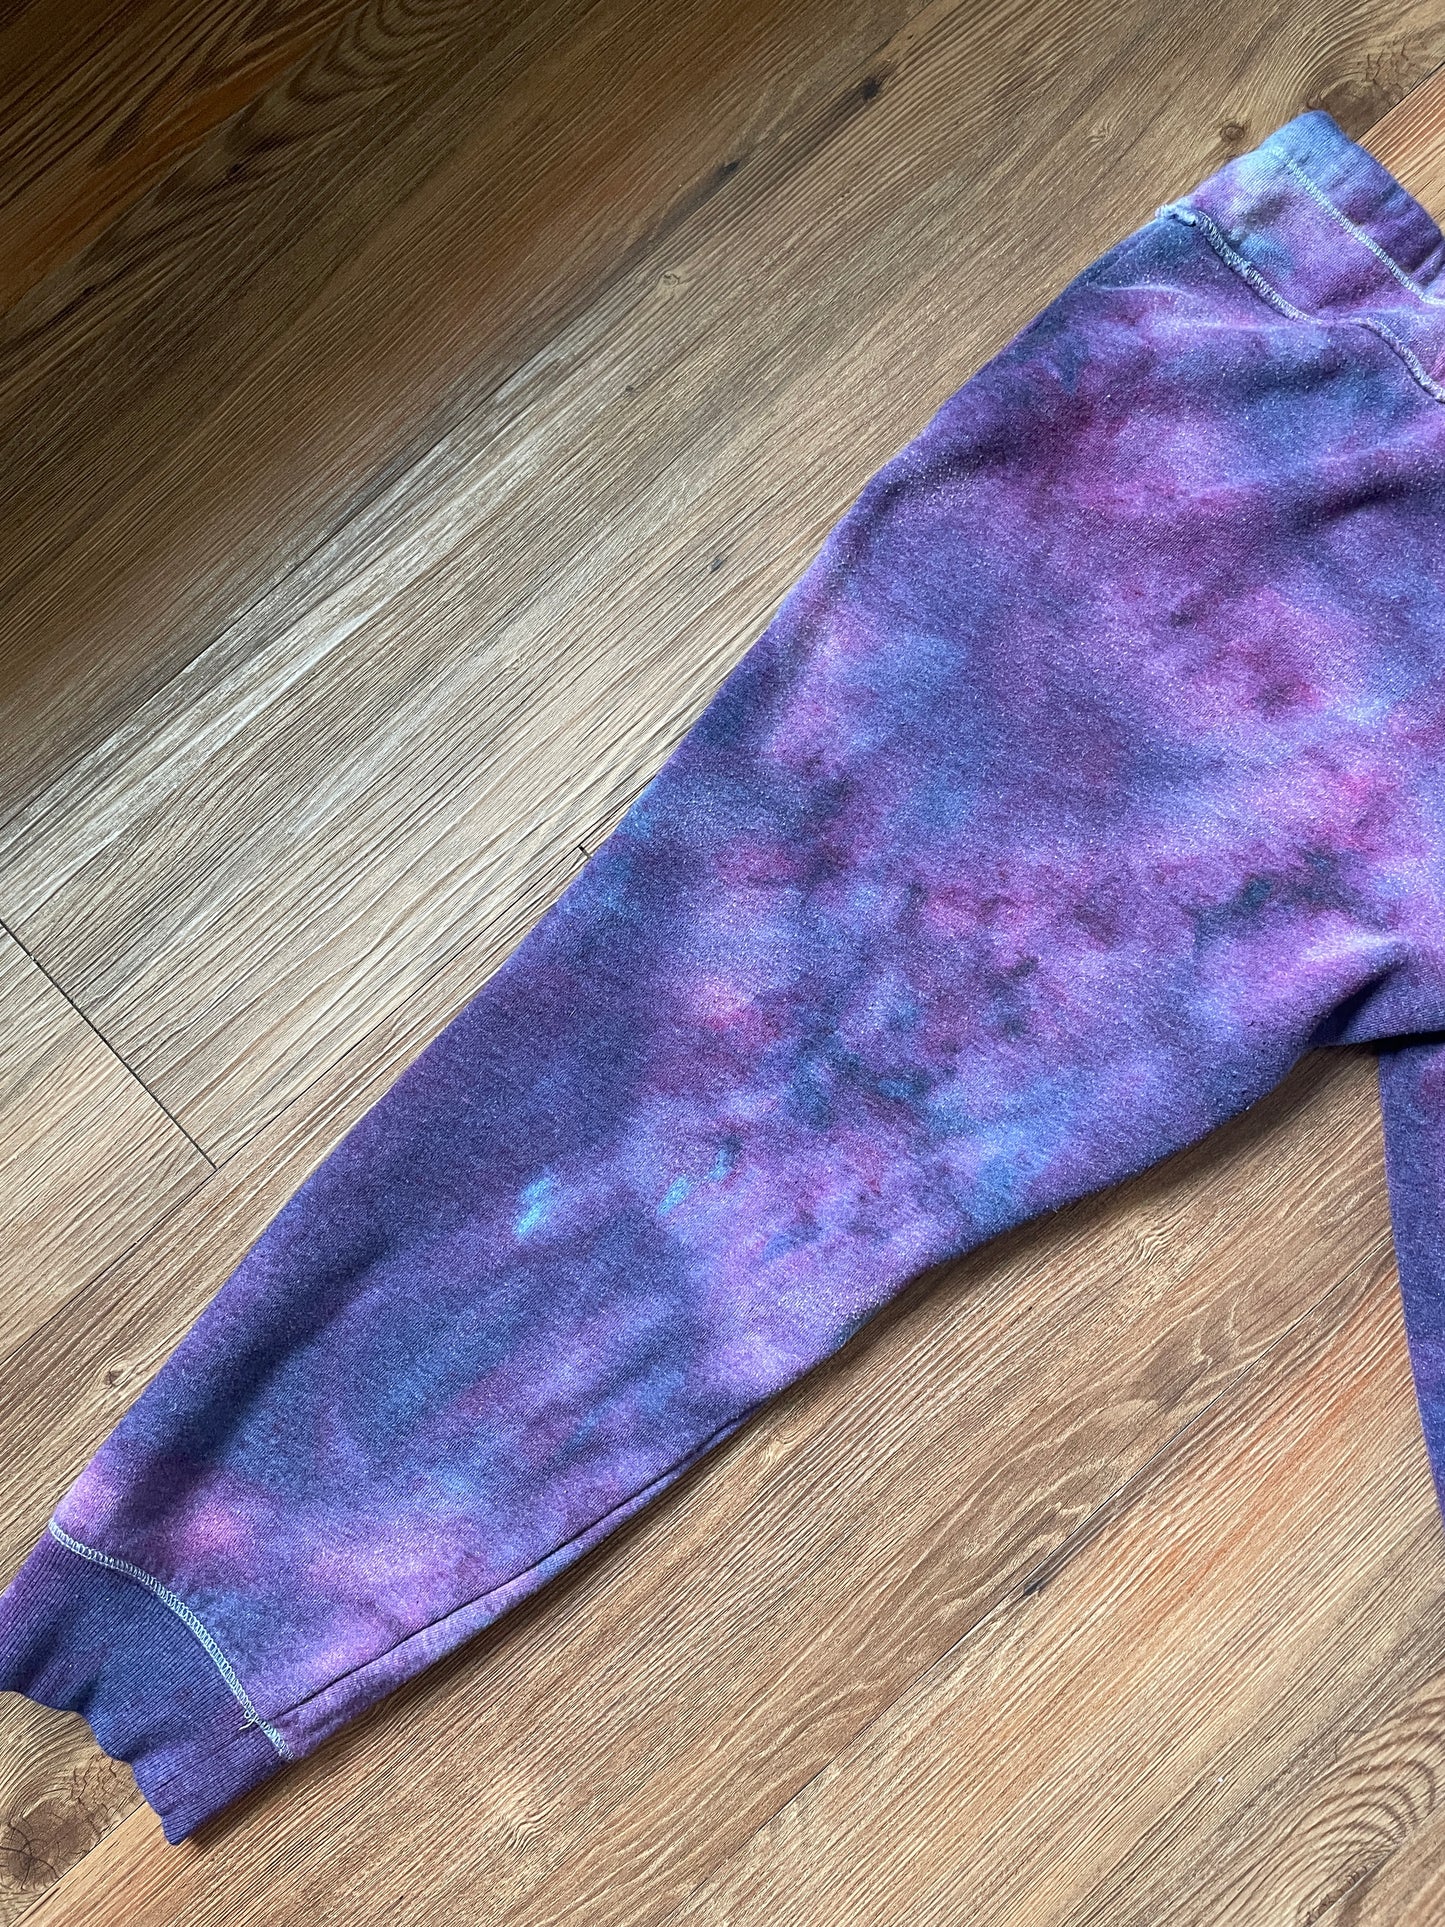 LARGE Women's Calvin Klein Galaxy Tie Dye Sweatpants | Shades of Blue and Purple Ice Dye Pants